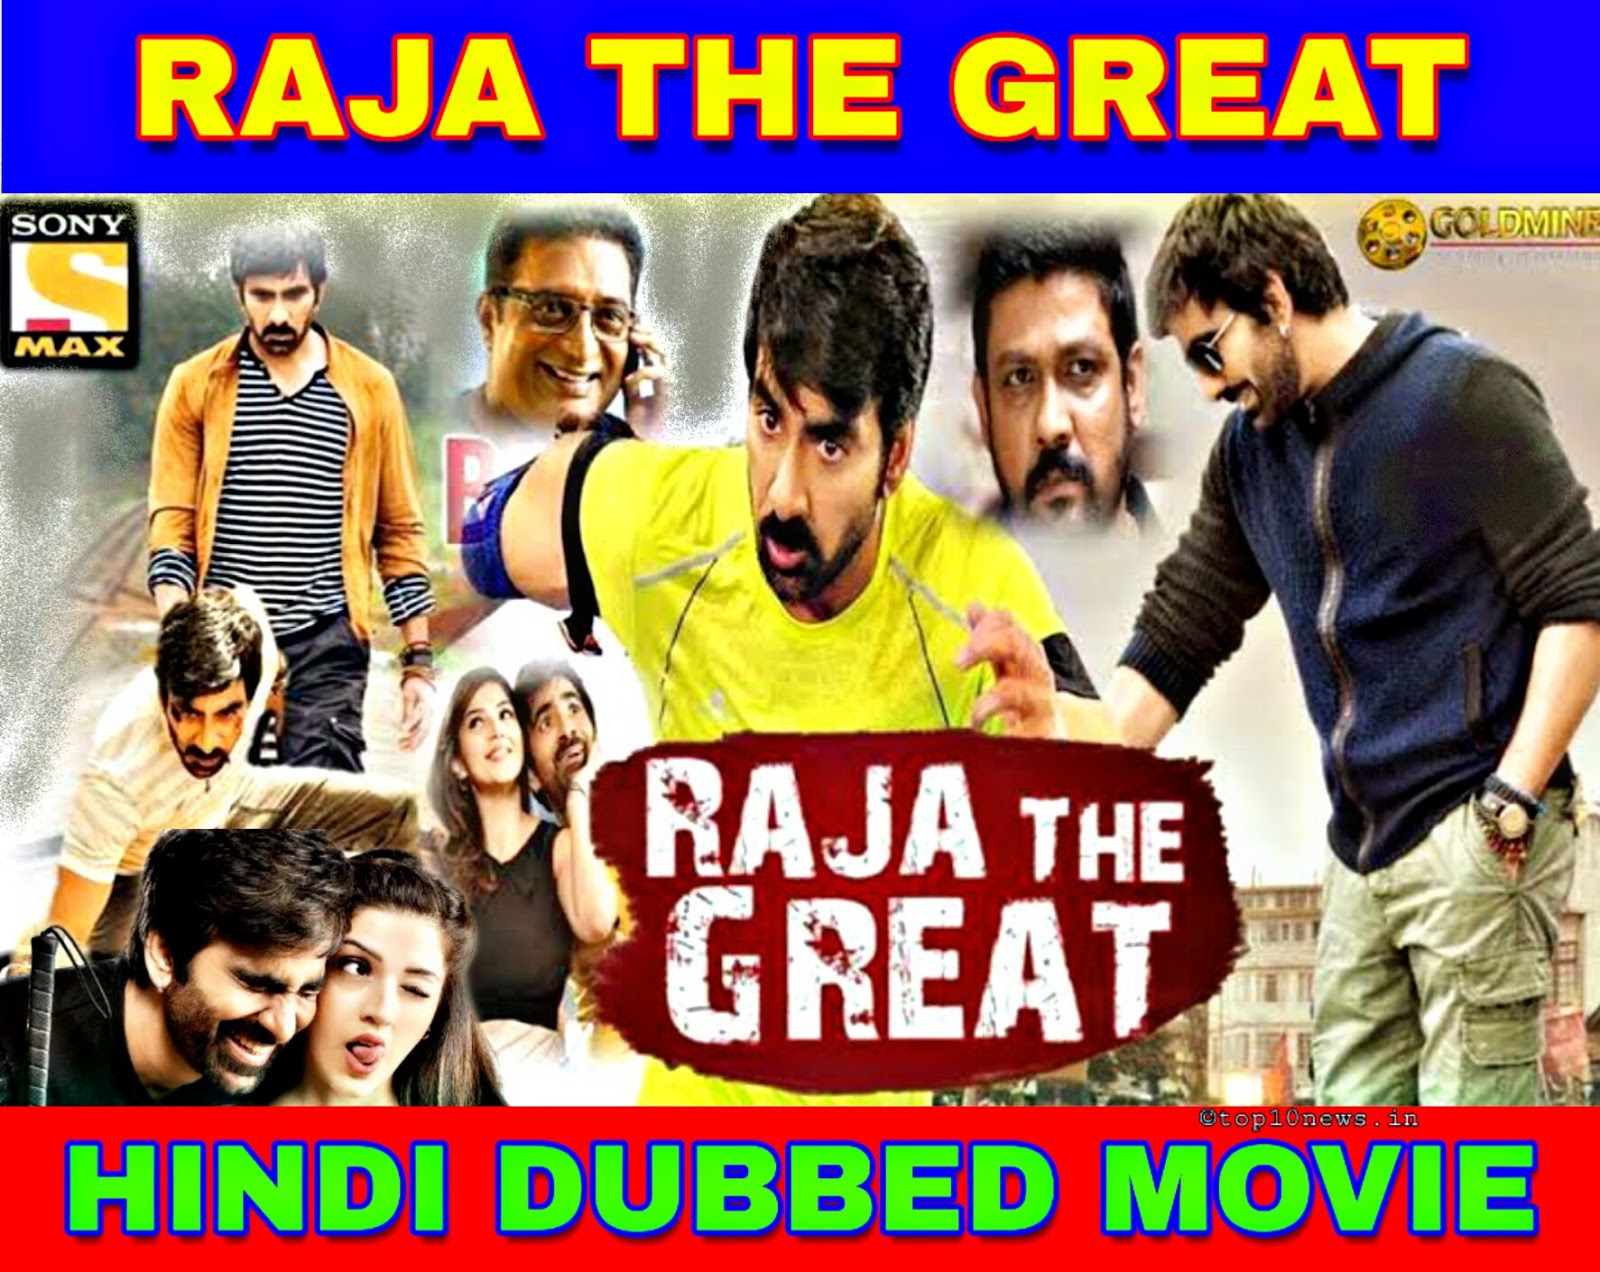 Raja The Great (Hindi Dubbed) Full Movie Download Filmywap, Filmyzilla, mp4moviez